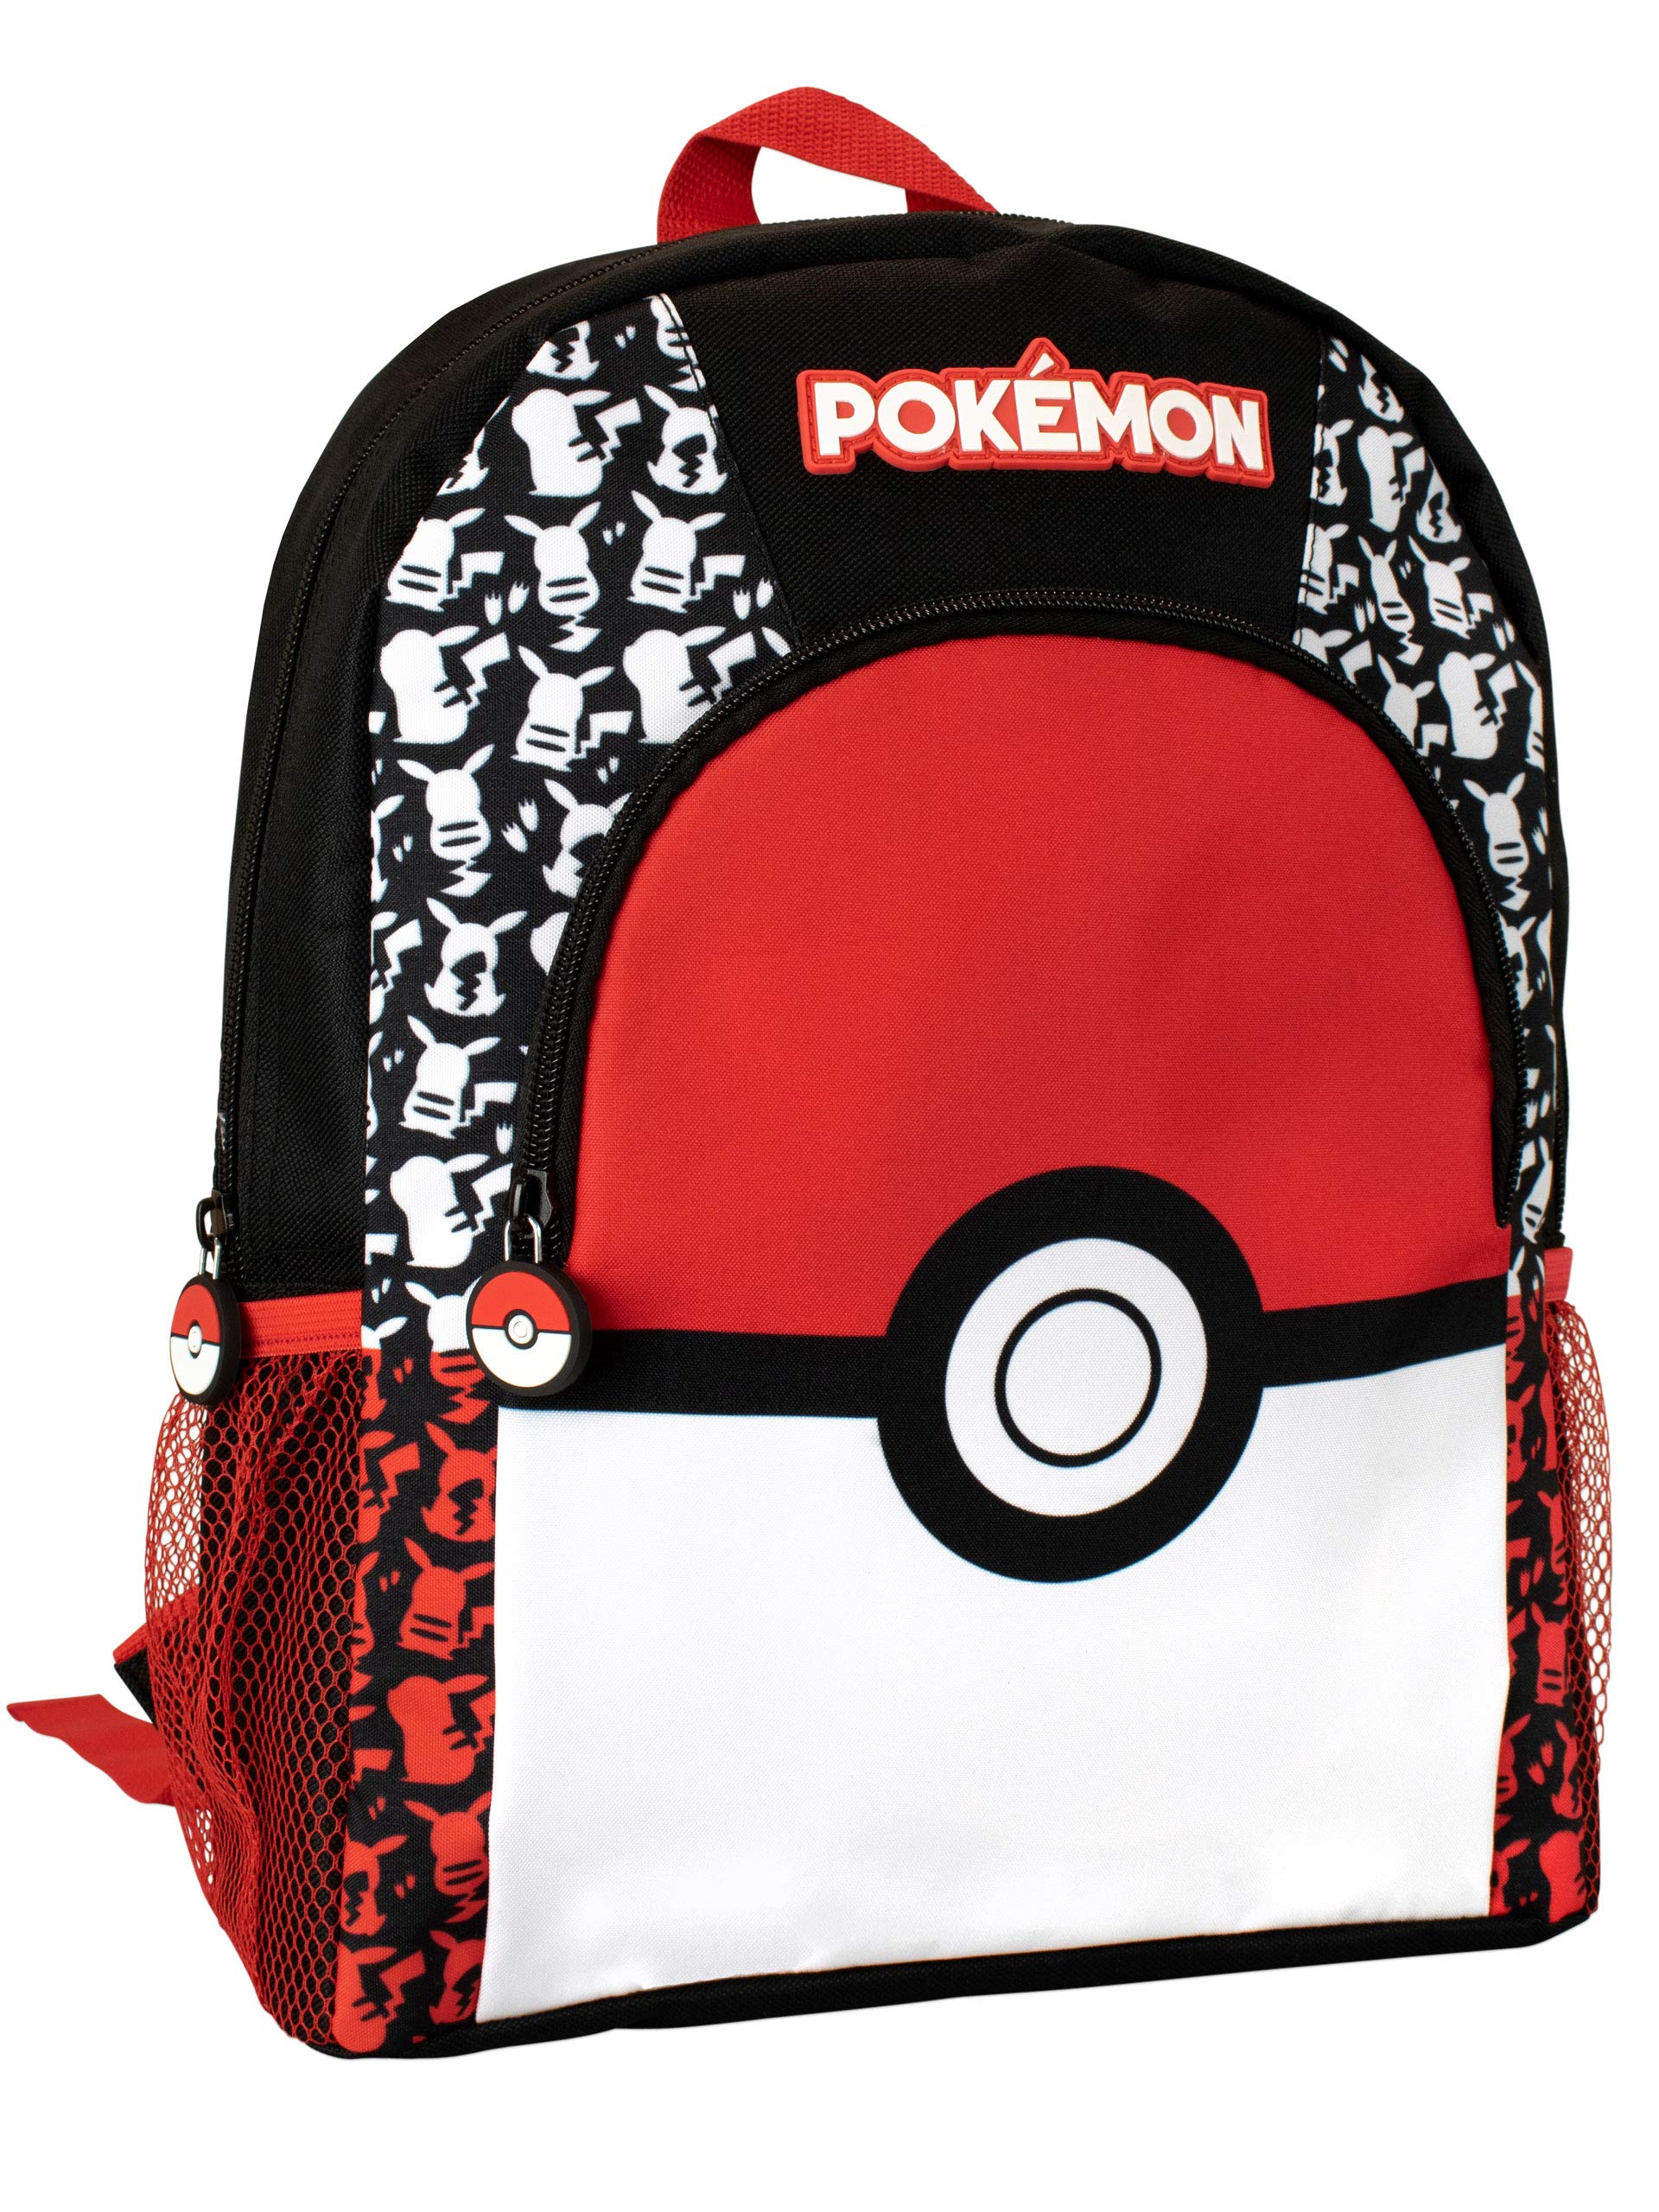 Pokémon Kids Backpack Multicolored